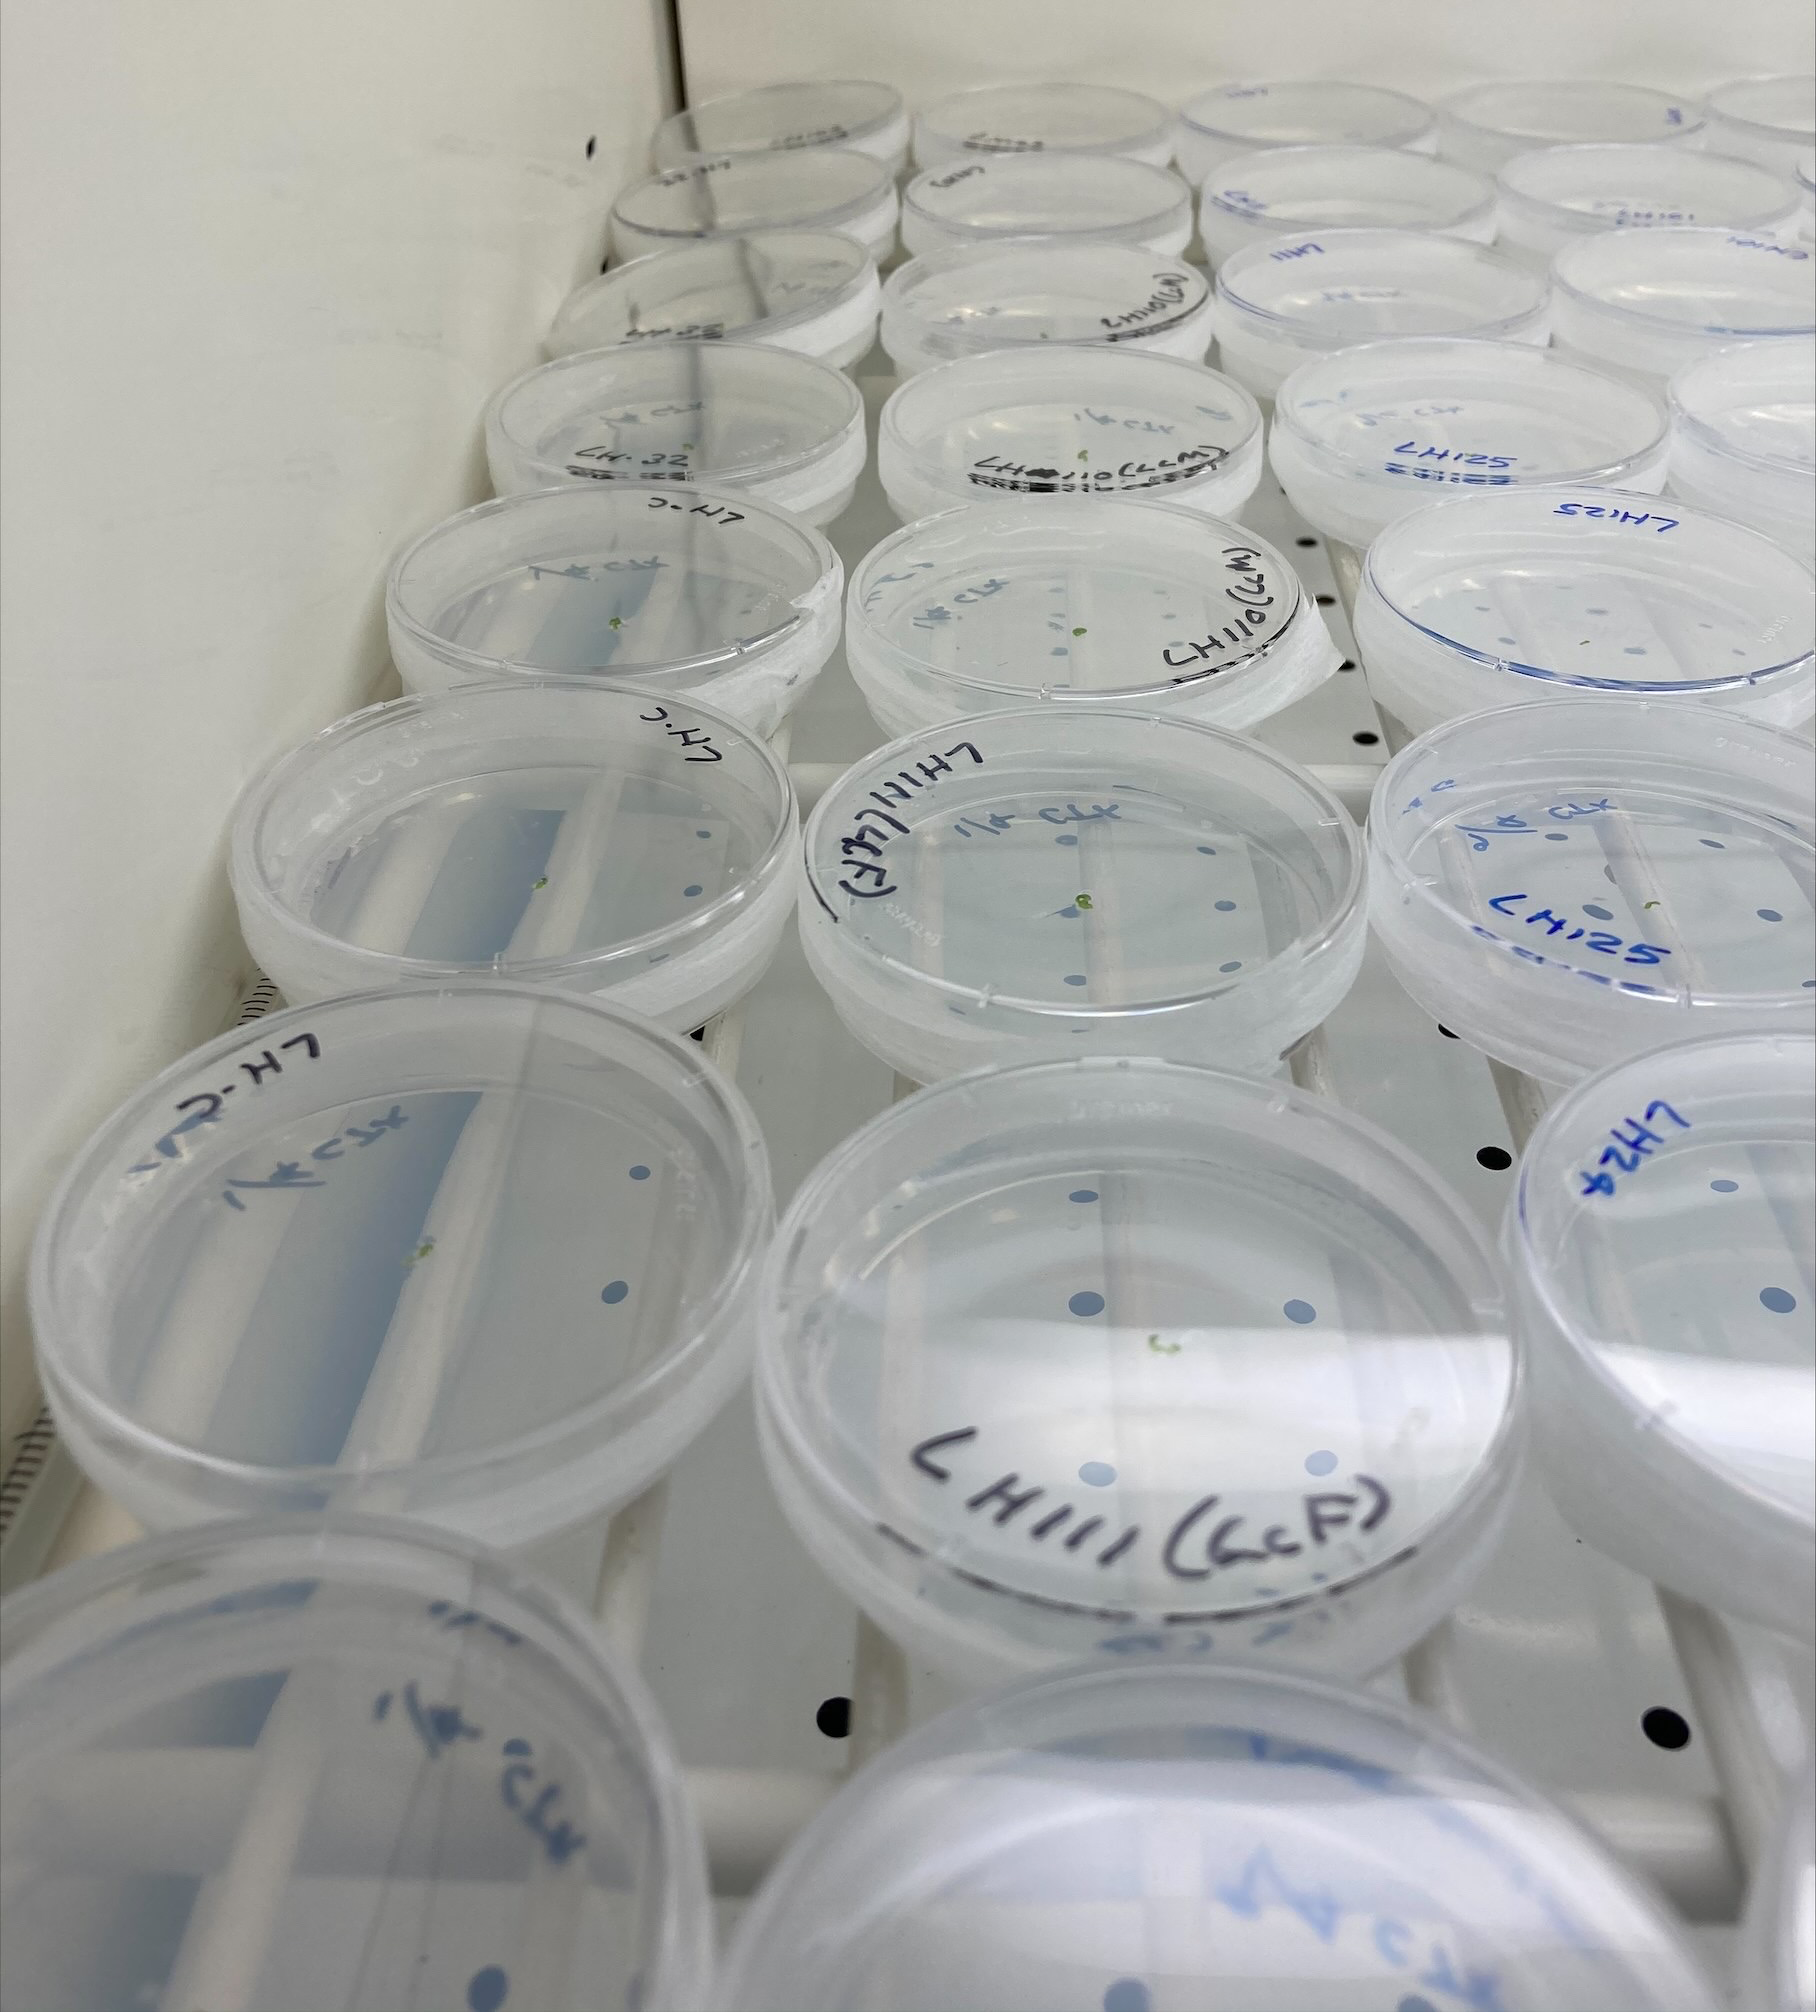 Multiple plates of gemmae developing into liverwort plants